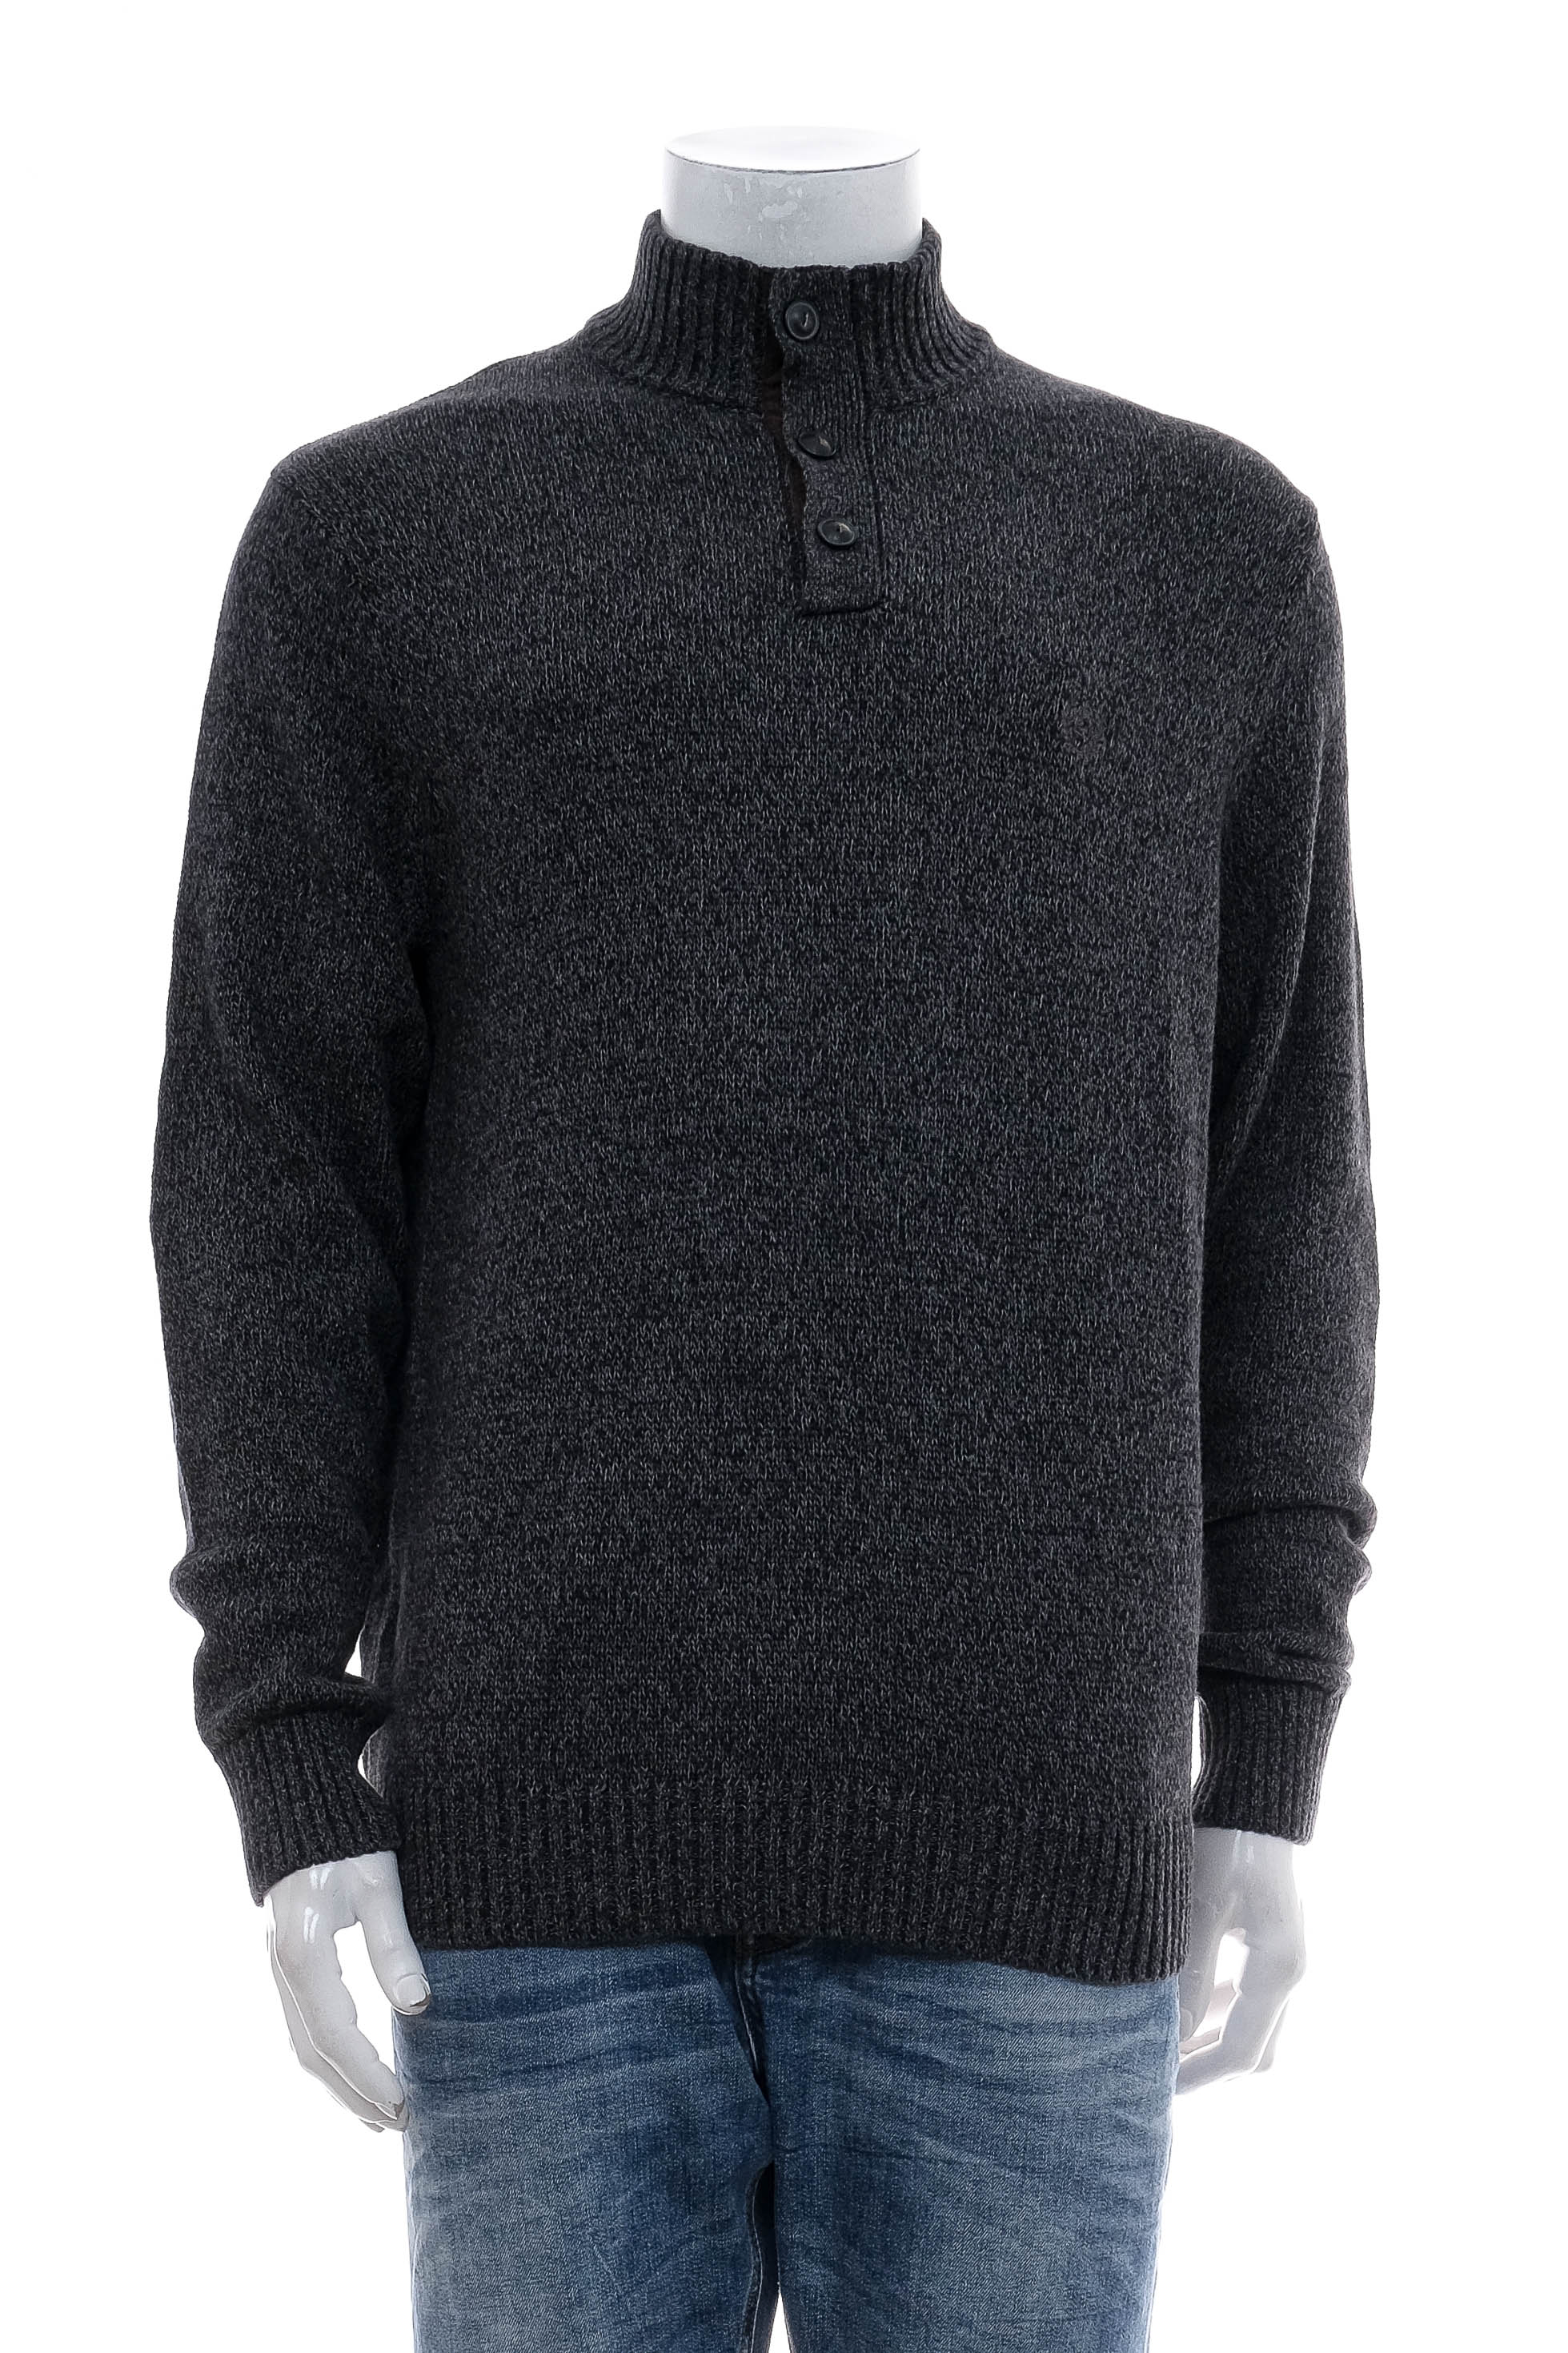 Men's sweater - CHAPS - 0